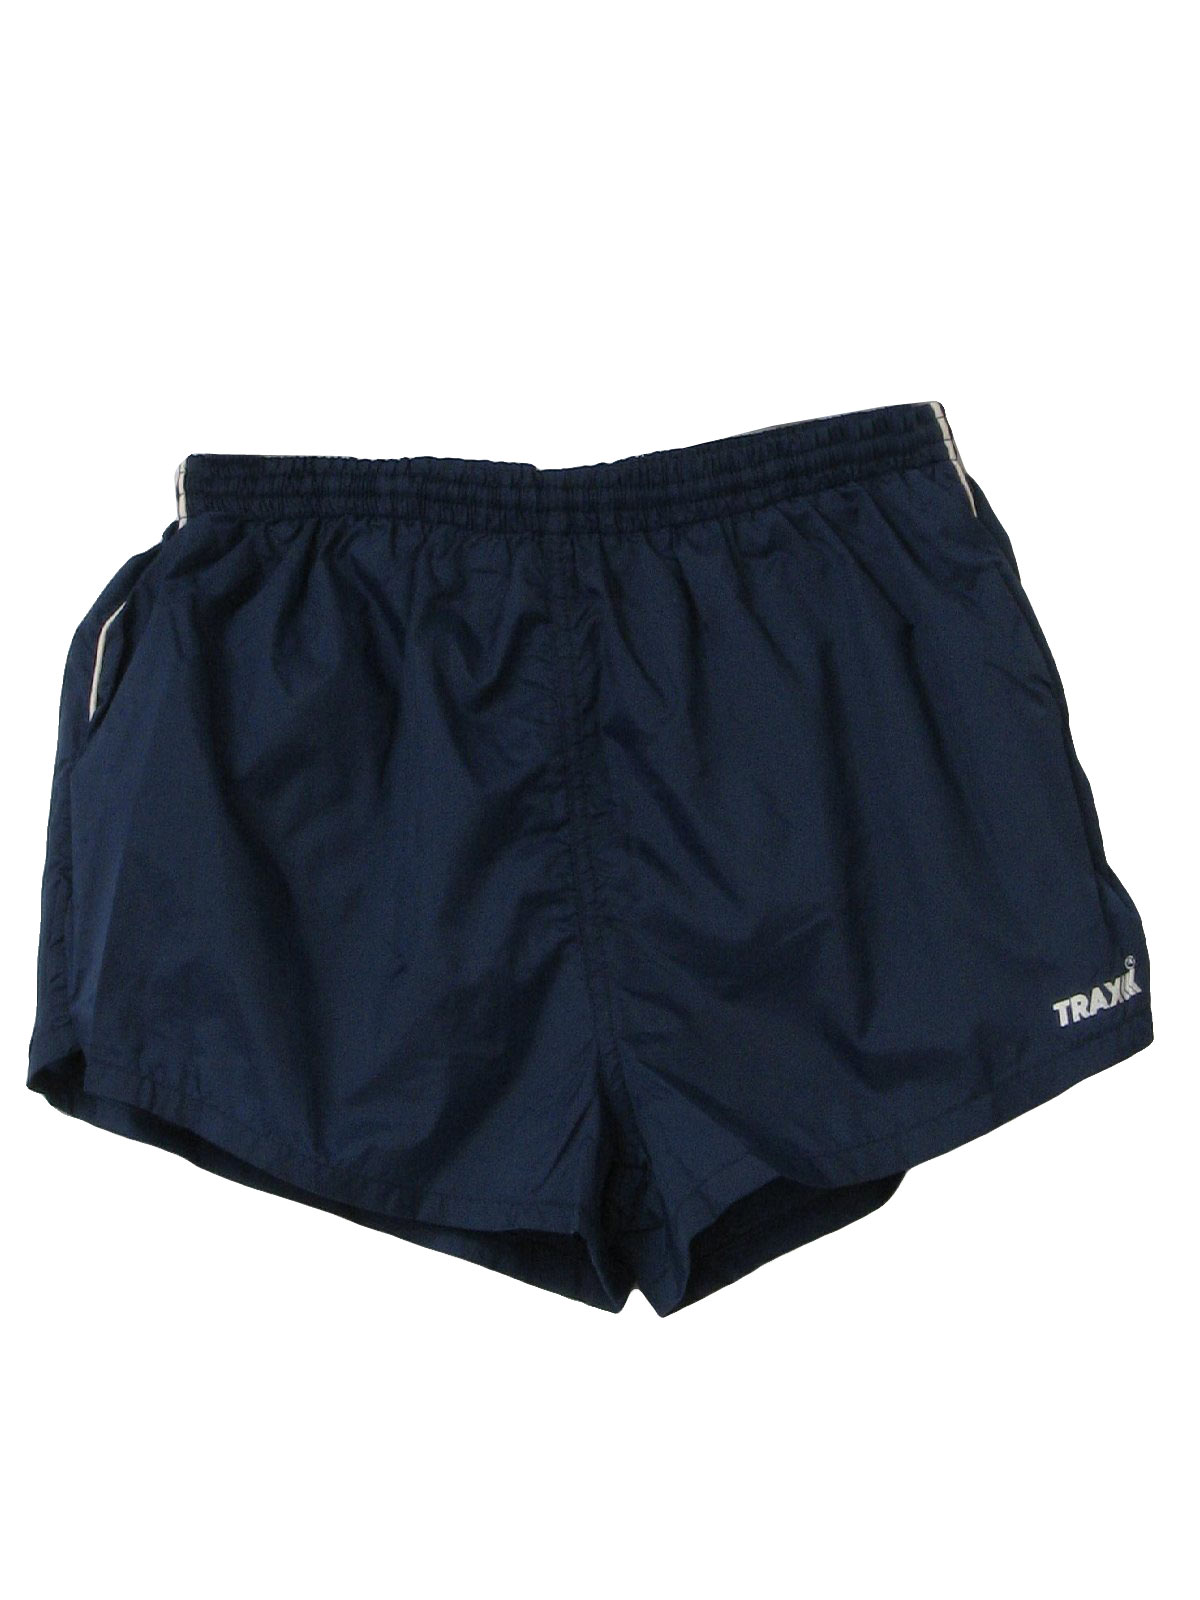 Vintage 80s Shorts: 80s -Trax- Mens dark blue nylon totally 80s running ...